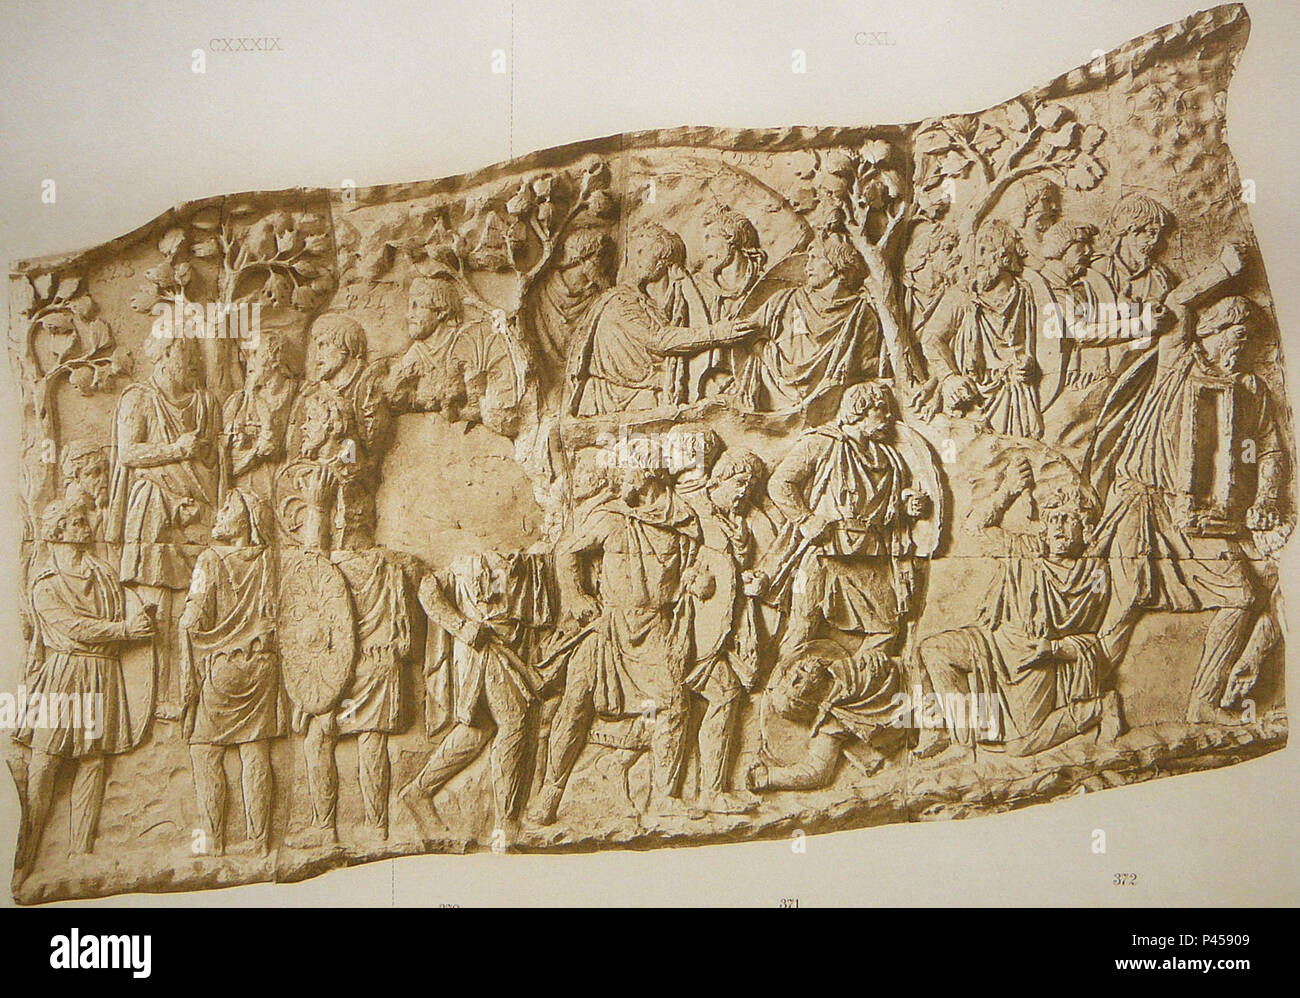 102 Conrad Cichorius, Die Reliefs der Traianssäule, Tafel CII. Stock Photo